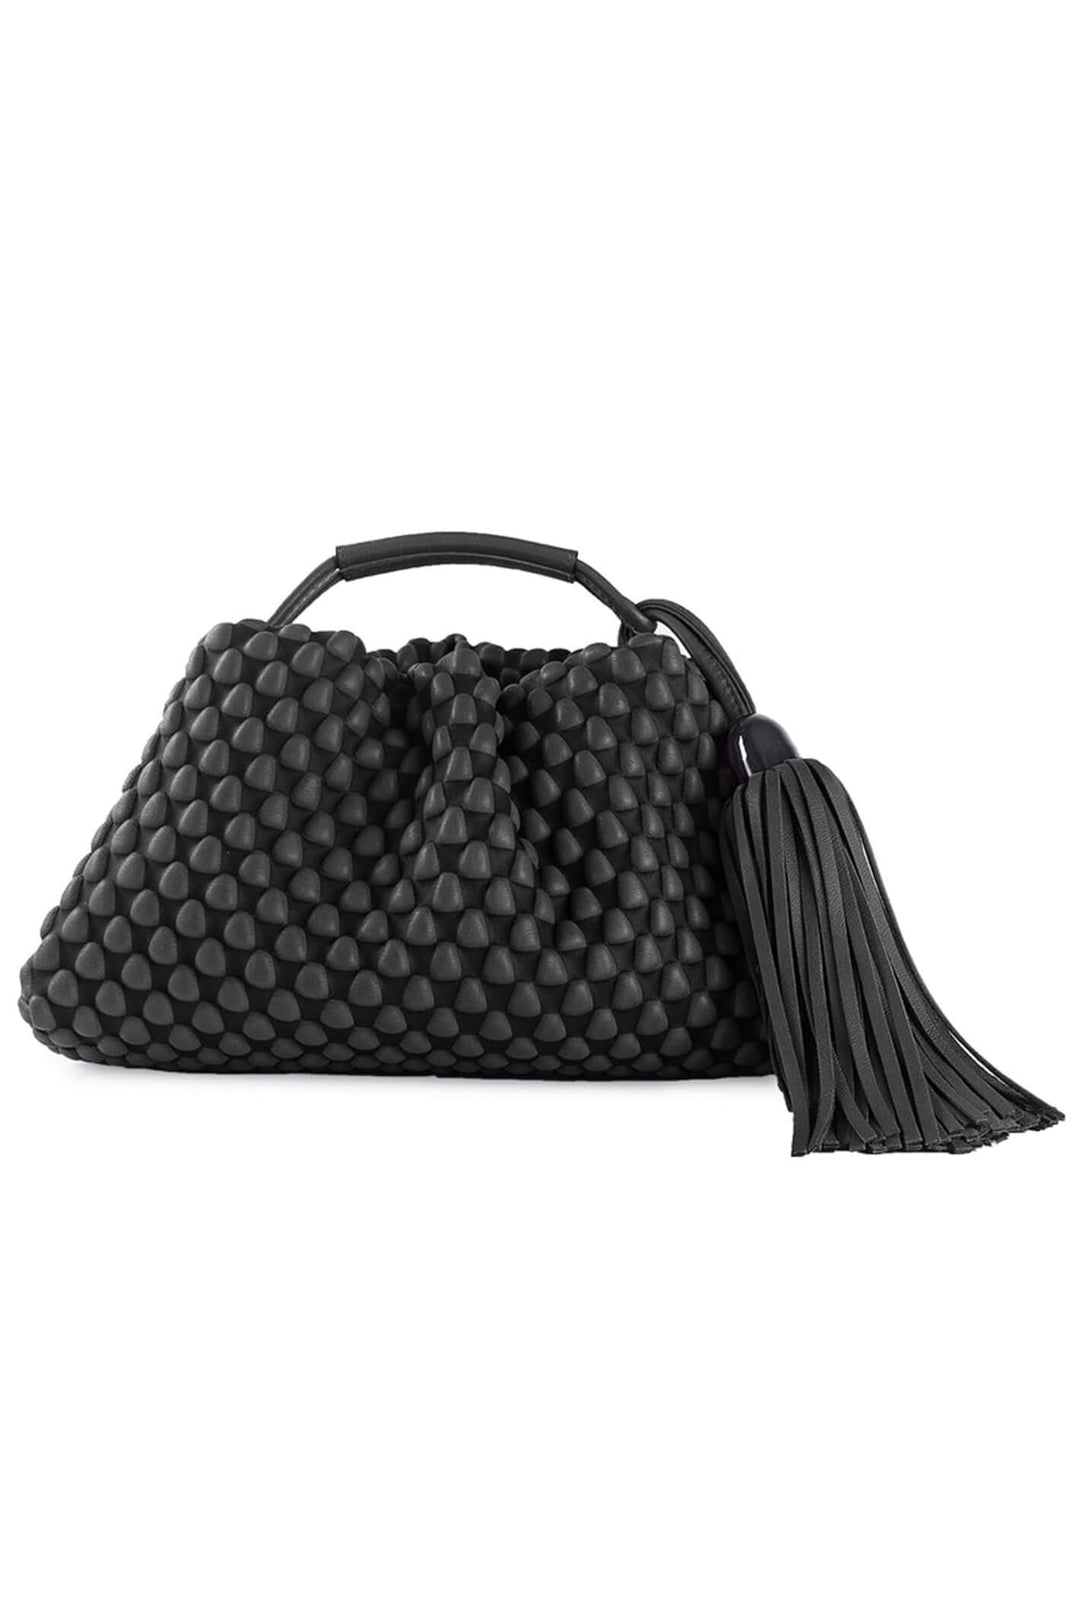 Tissa Fontaneda B80 Tango Nappa Leather Black Bubble Bag - Olivia Grace Fashion